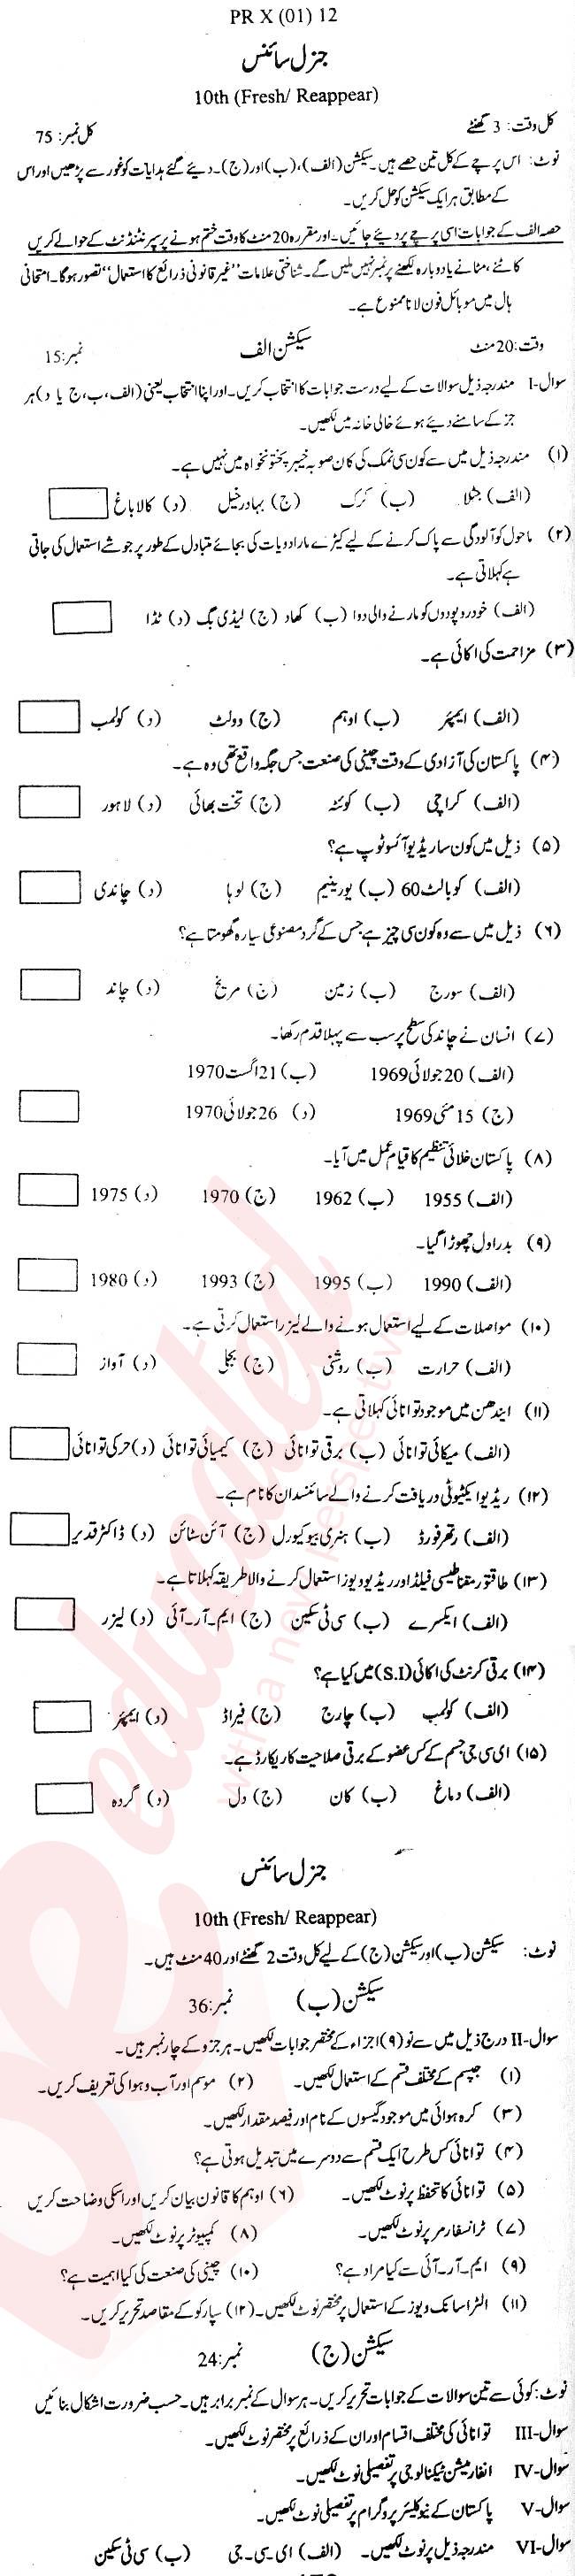 General Science 10th Urdu Medium Past Paper Group 1 BISE Mardan 2012